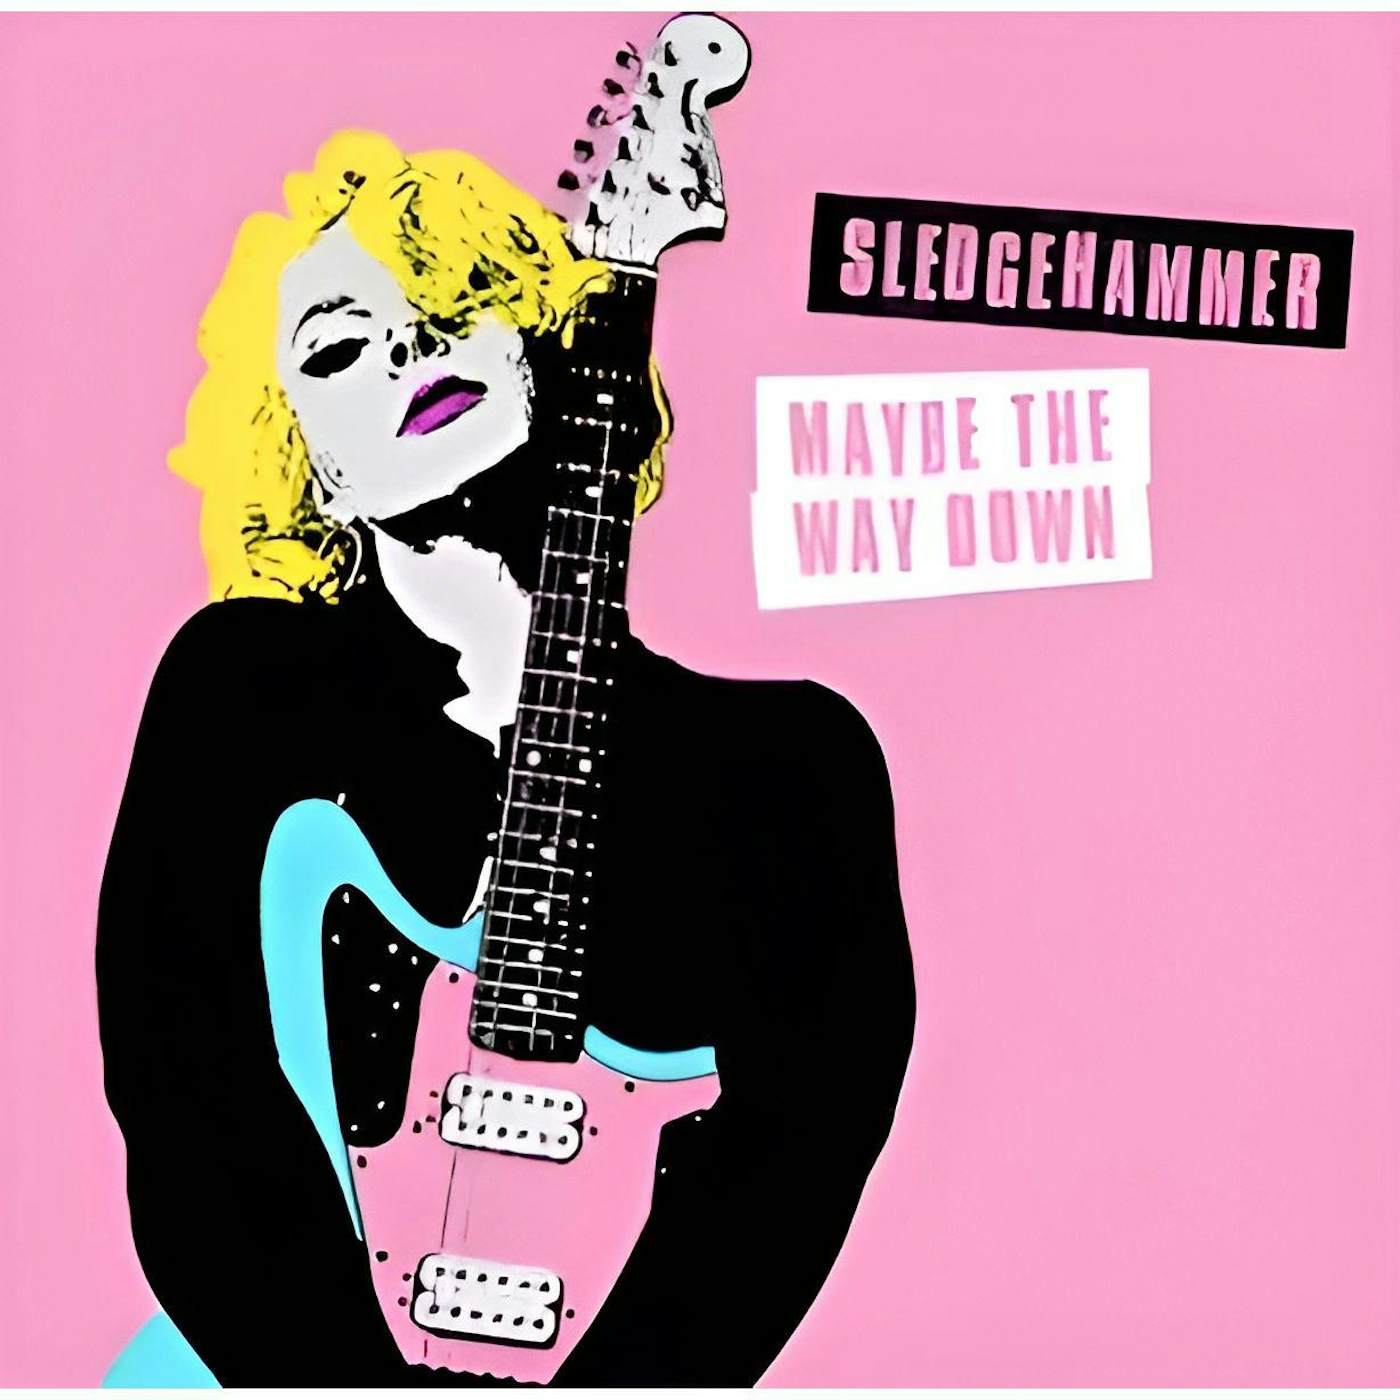 Samantha Fish SLEDGEHAMMER / MAYBE THE WAY DOWN Vinyl Record